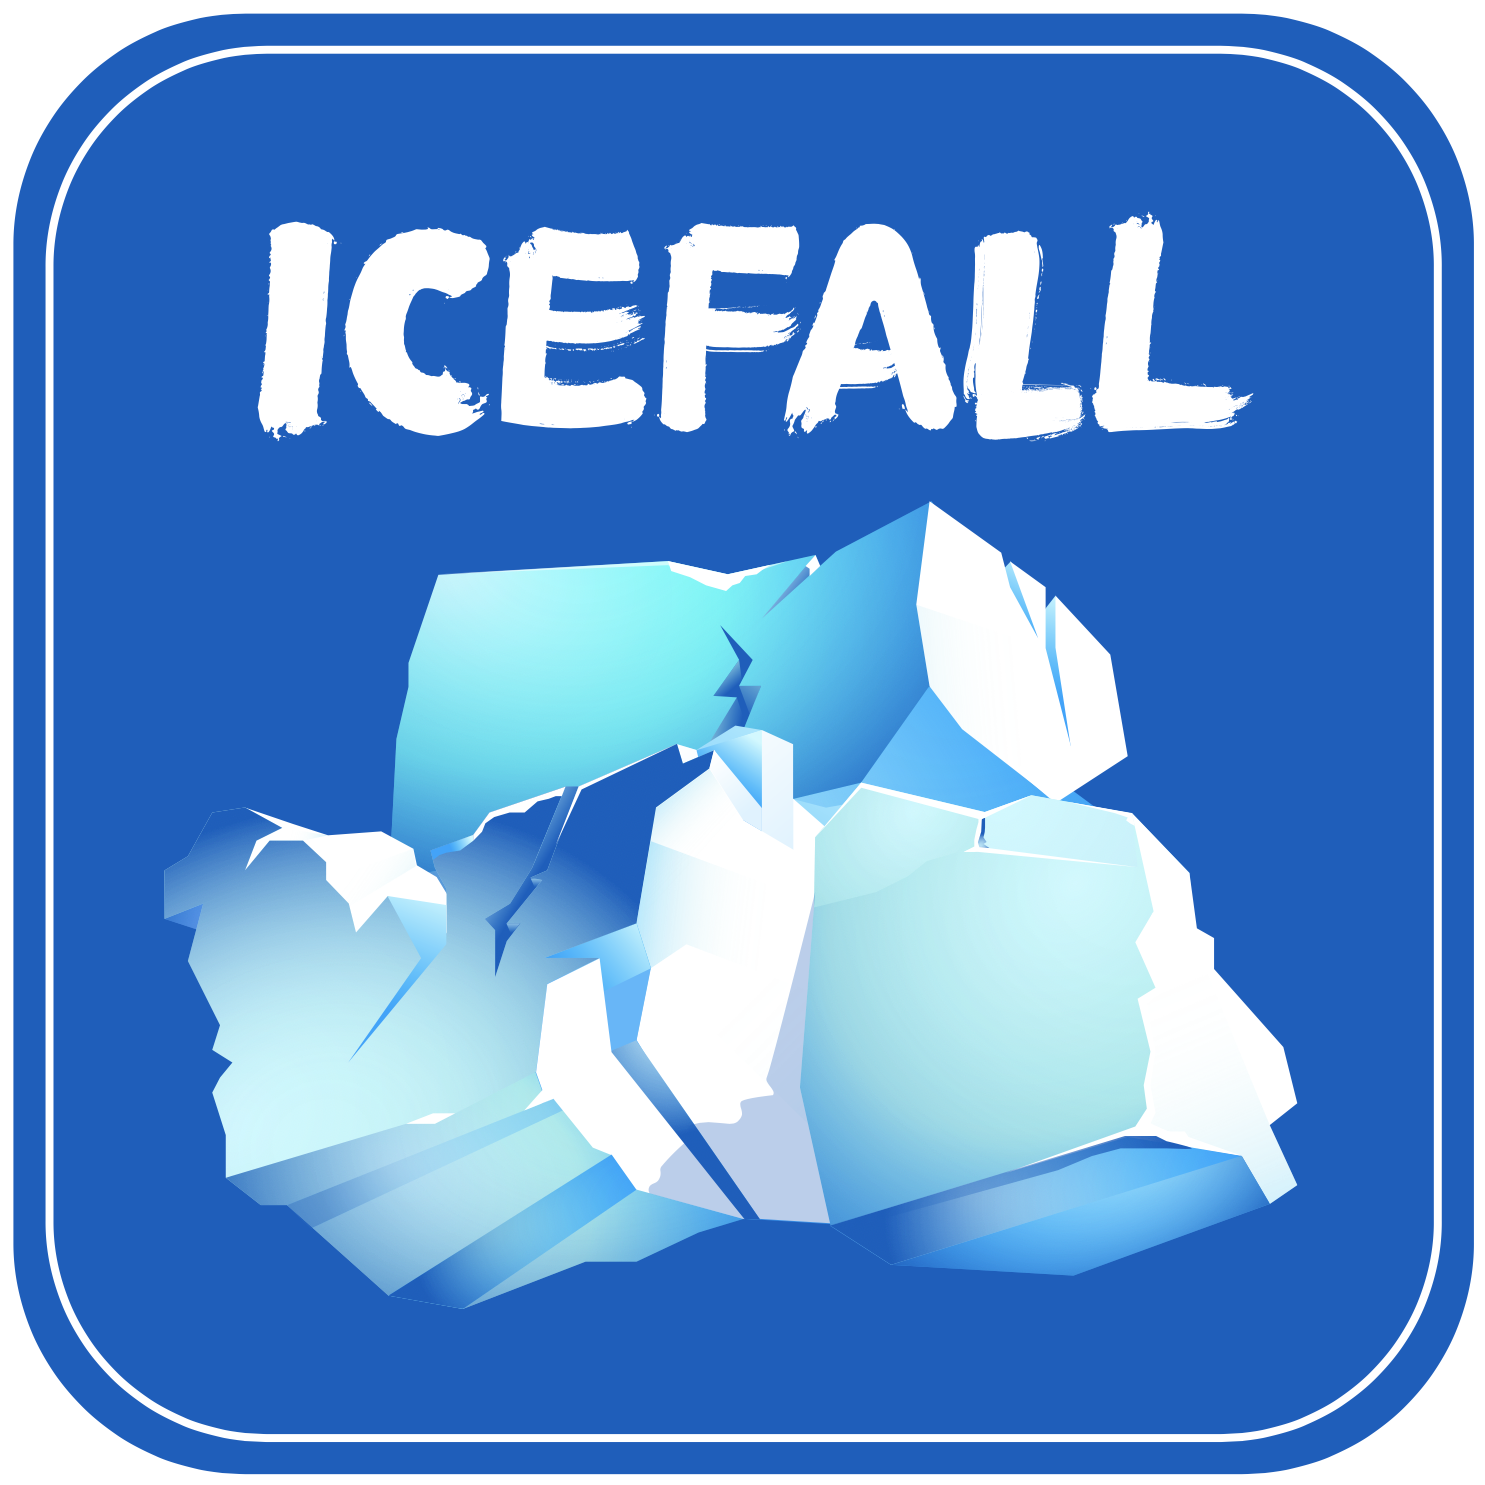 icefall logo